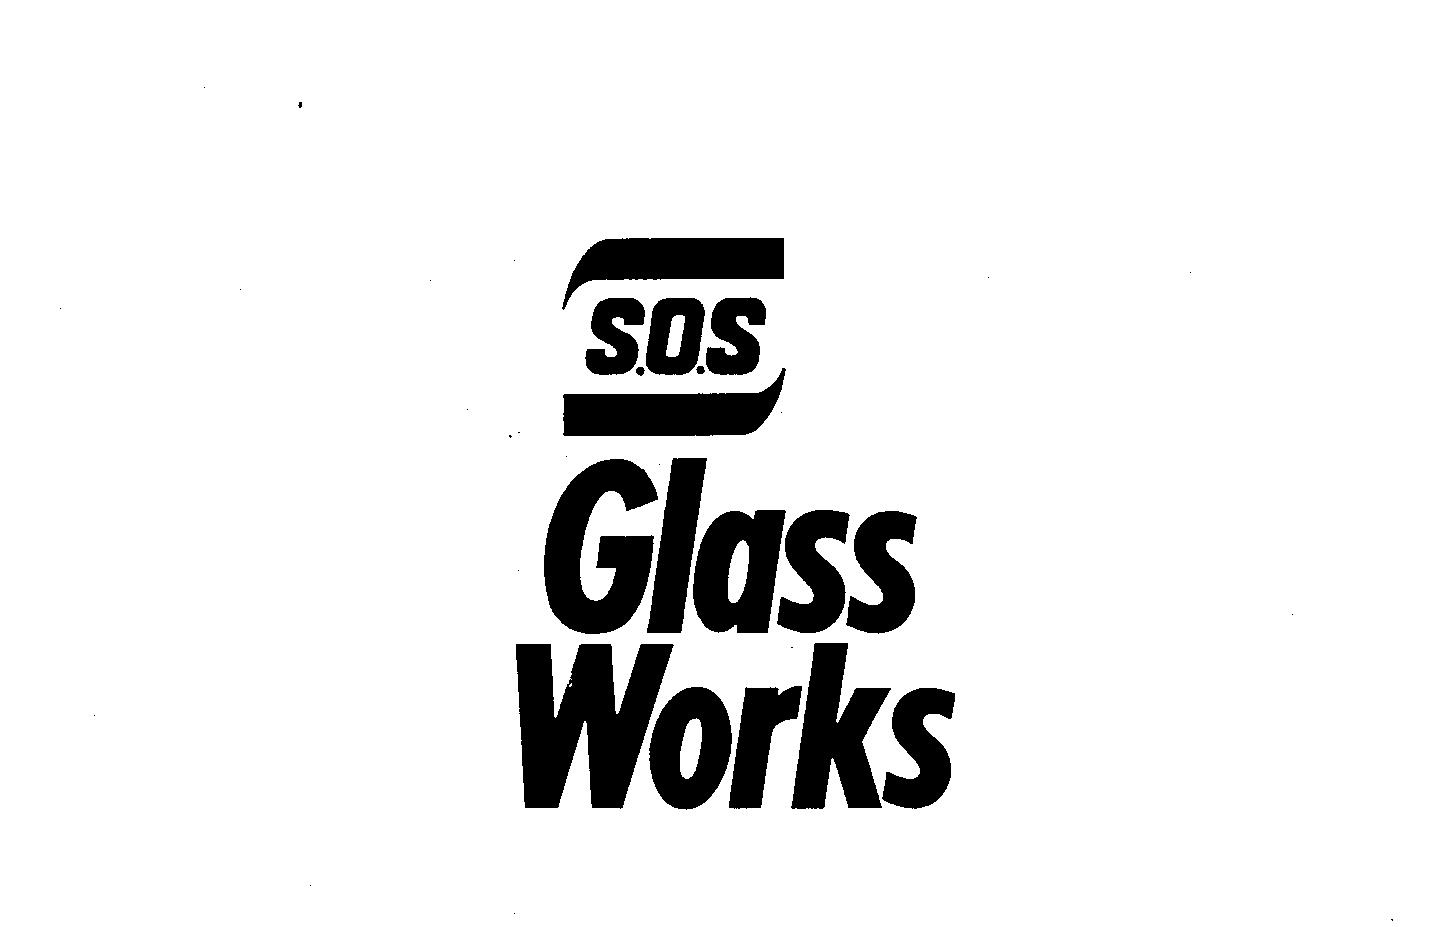  S.O.S. GLASS WORKS